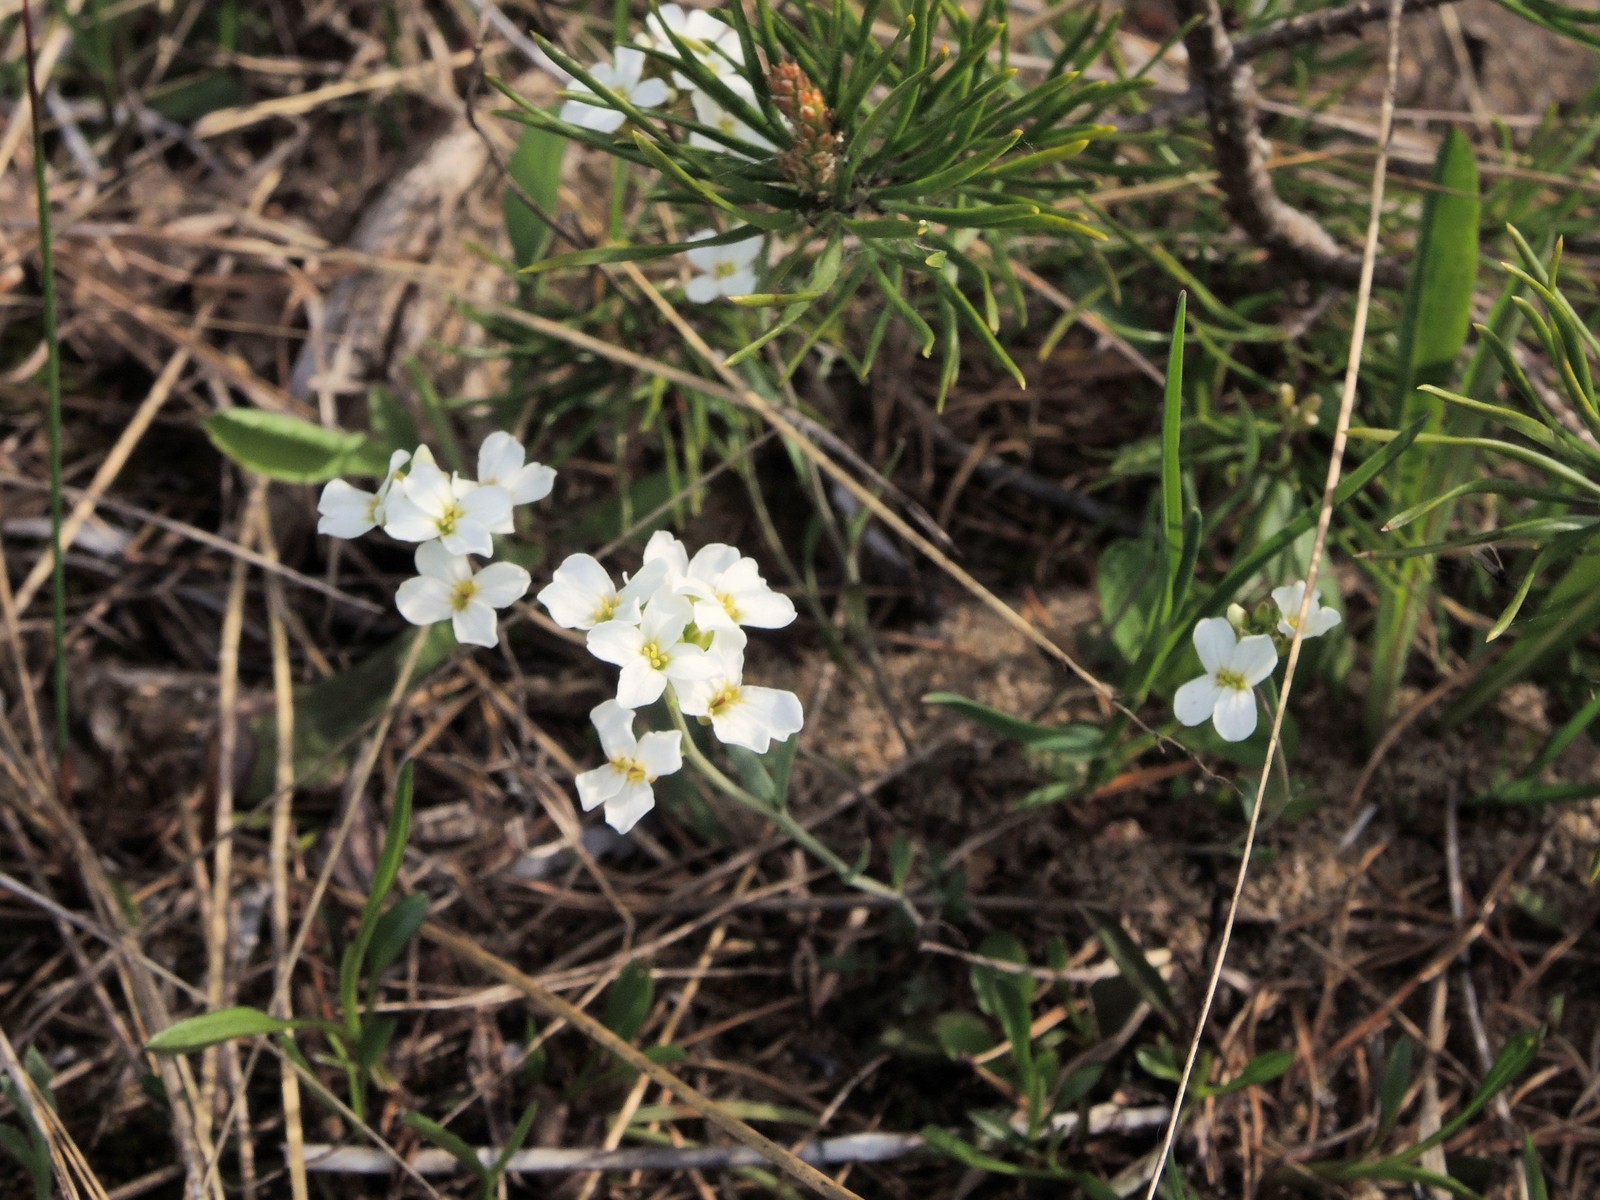 201405270941009 Lyre-leaved Rock Cress (Arabis lyrata) white flowers - Misery Bay NP, Manitoulin Island.JPG